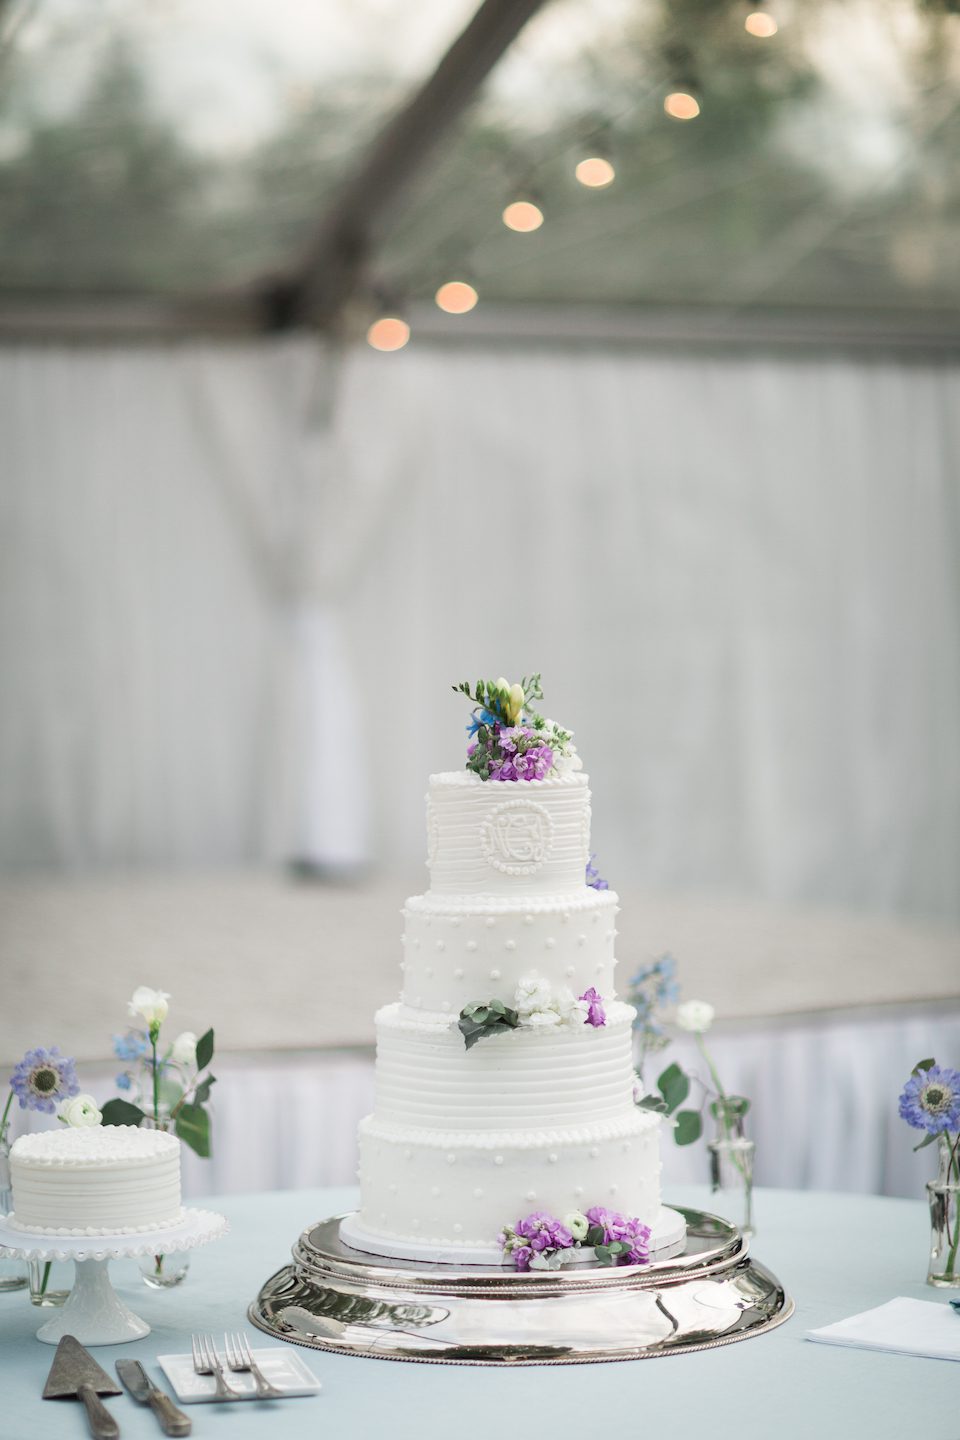 Wedding cake by Lori@cakesbylori.org in Illinois